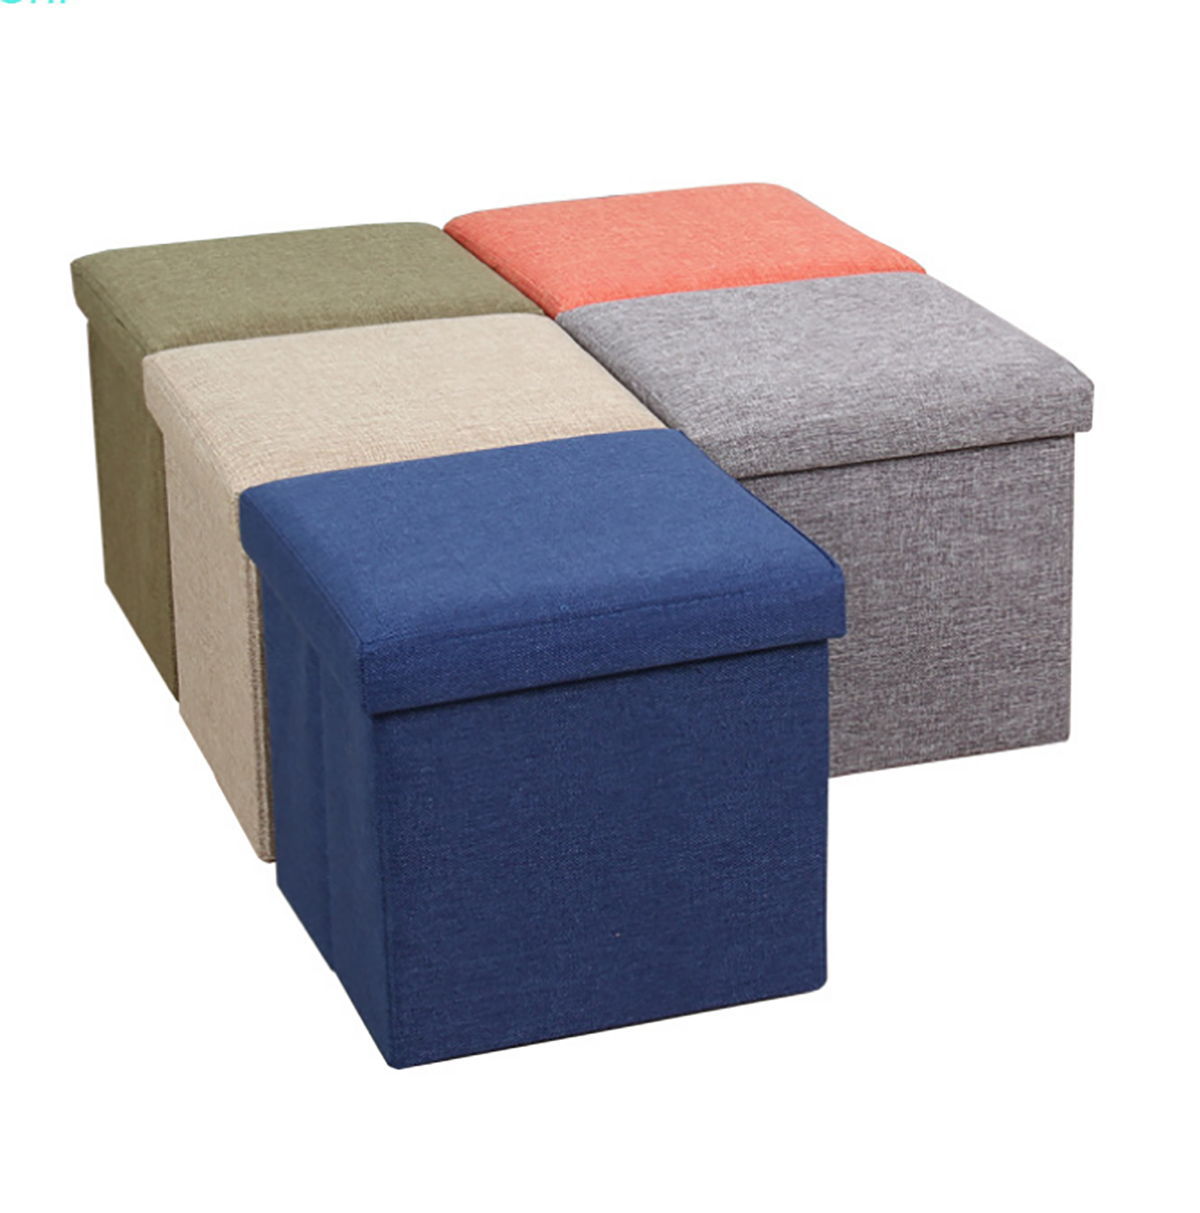 Linen Storage Box Bench Indoor Rest Stool Folding Ottomans Seat Footstools